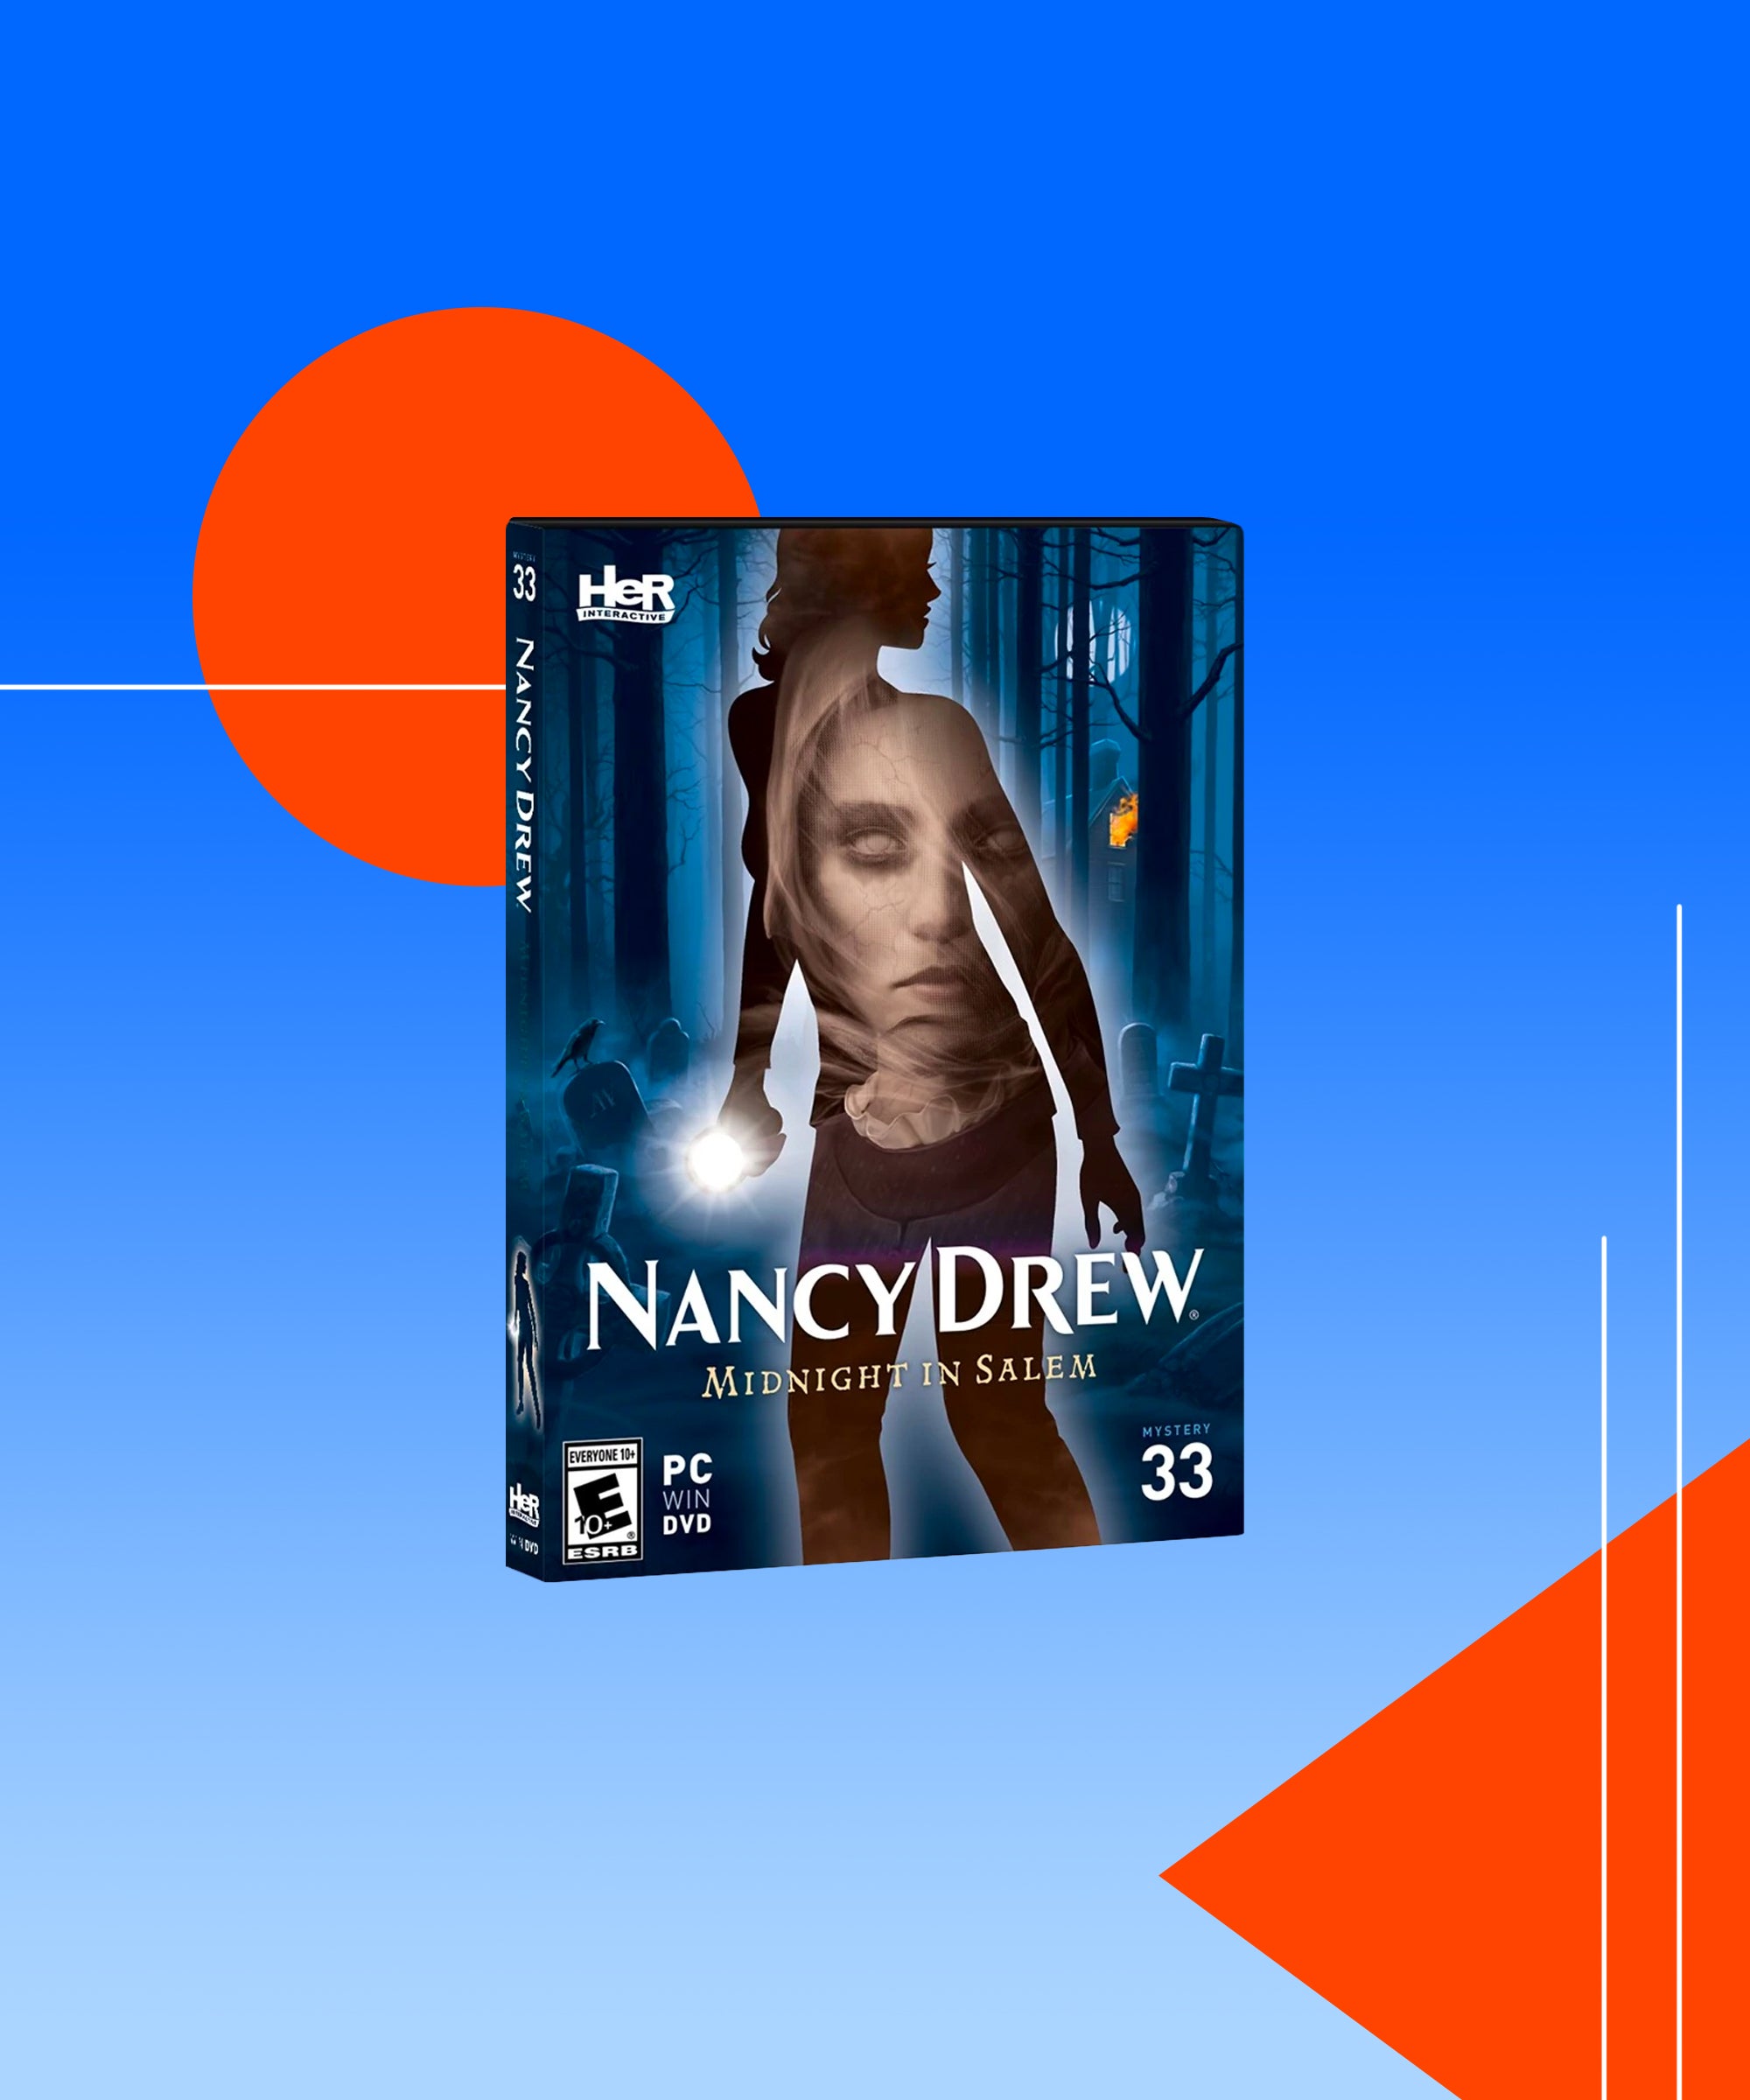 play nancy drew games free online